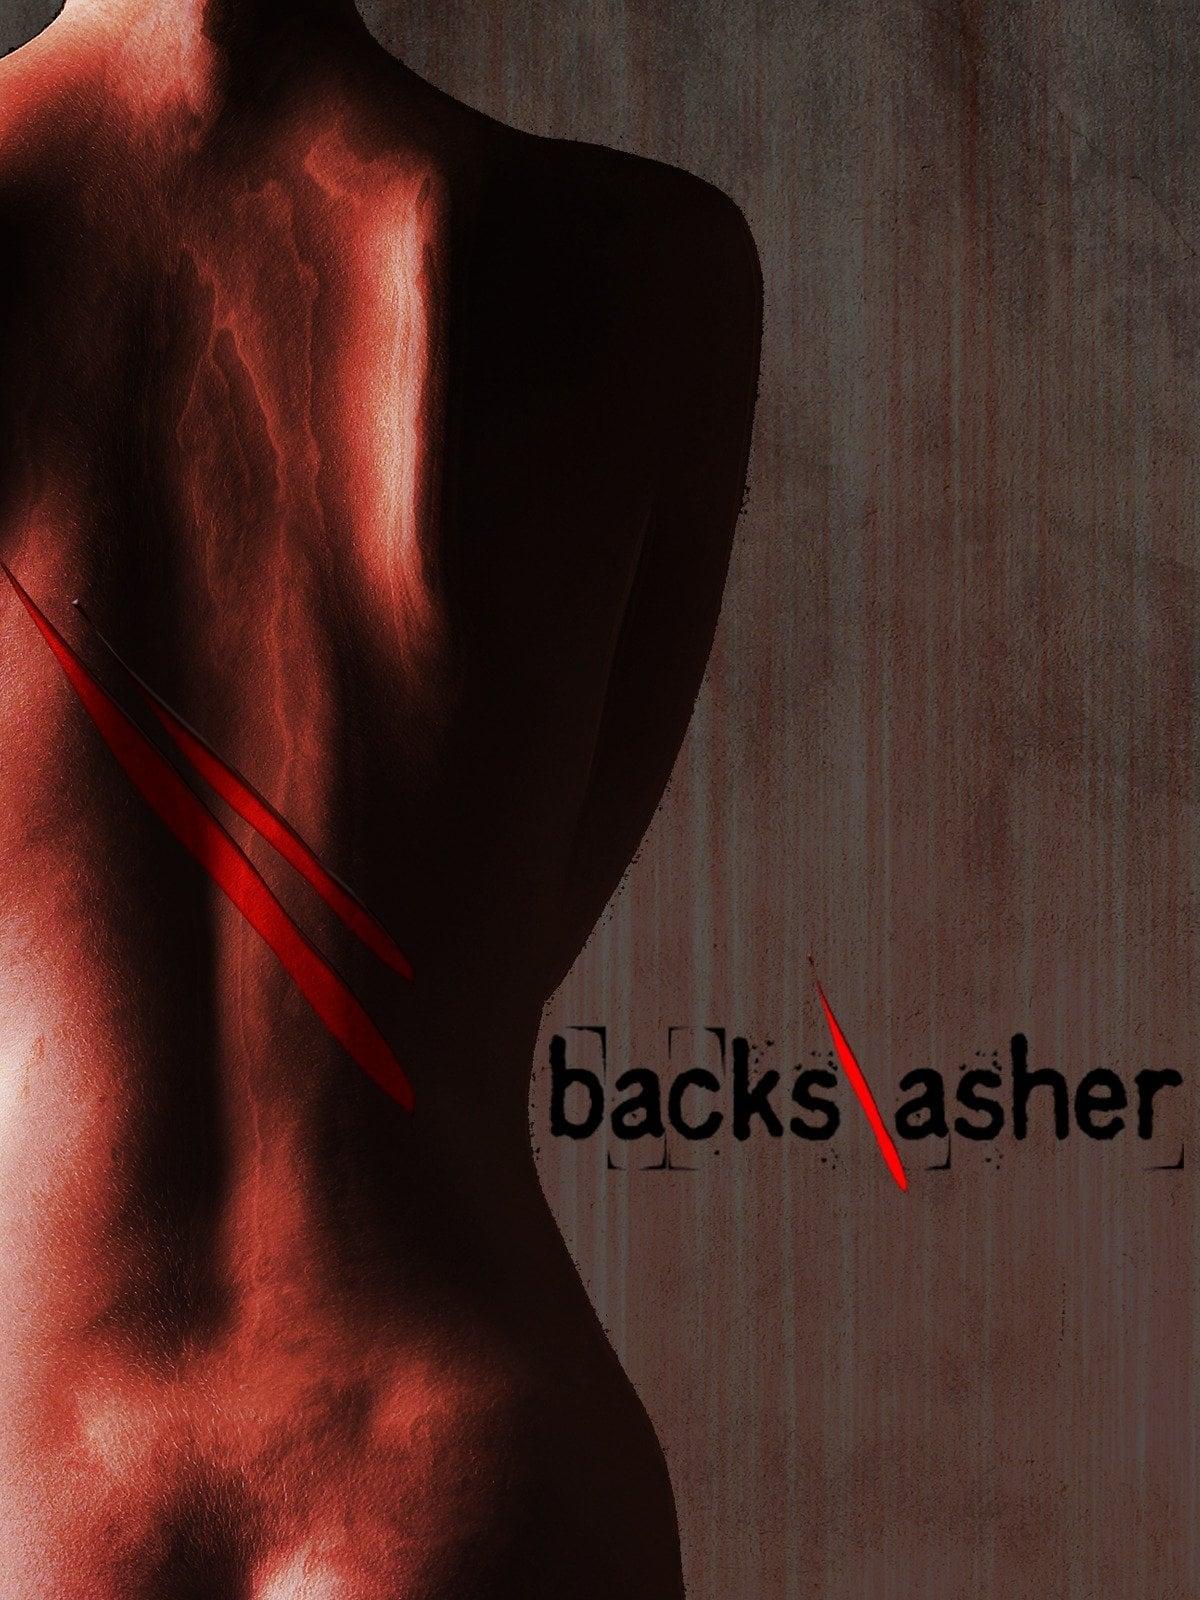 Backslasher poster